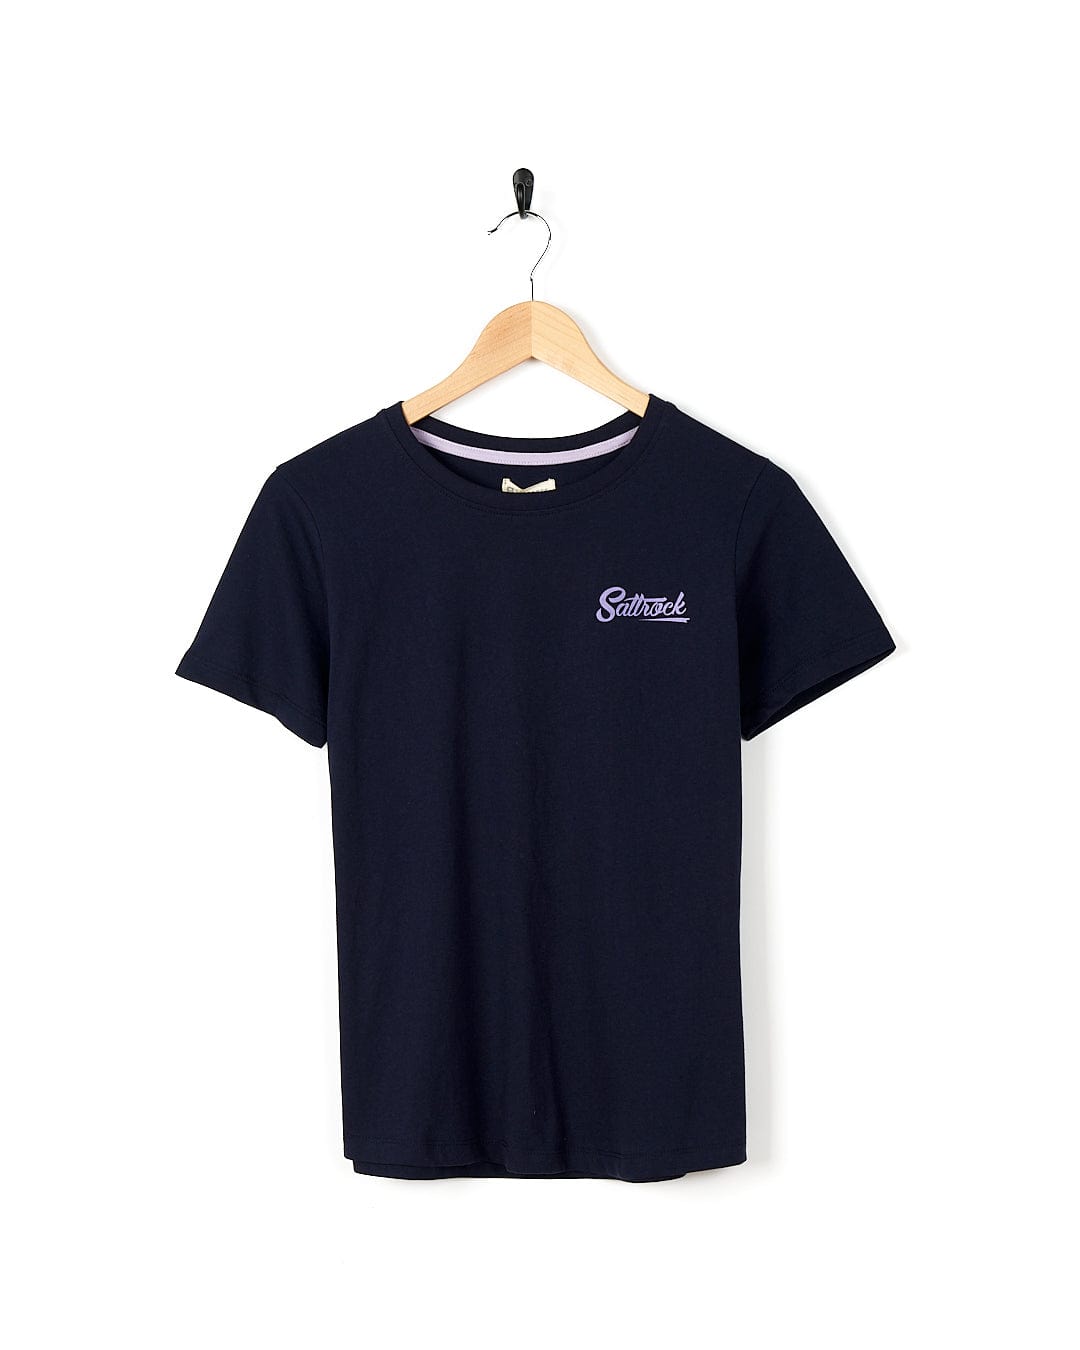 a Saltrock navy t-shirt with a purple logo on it.